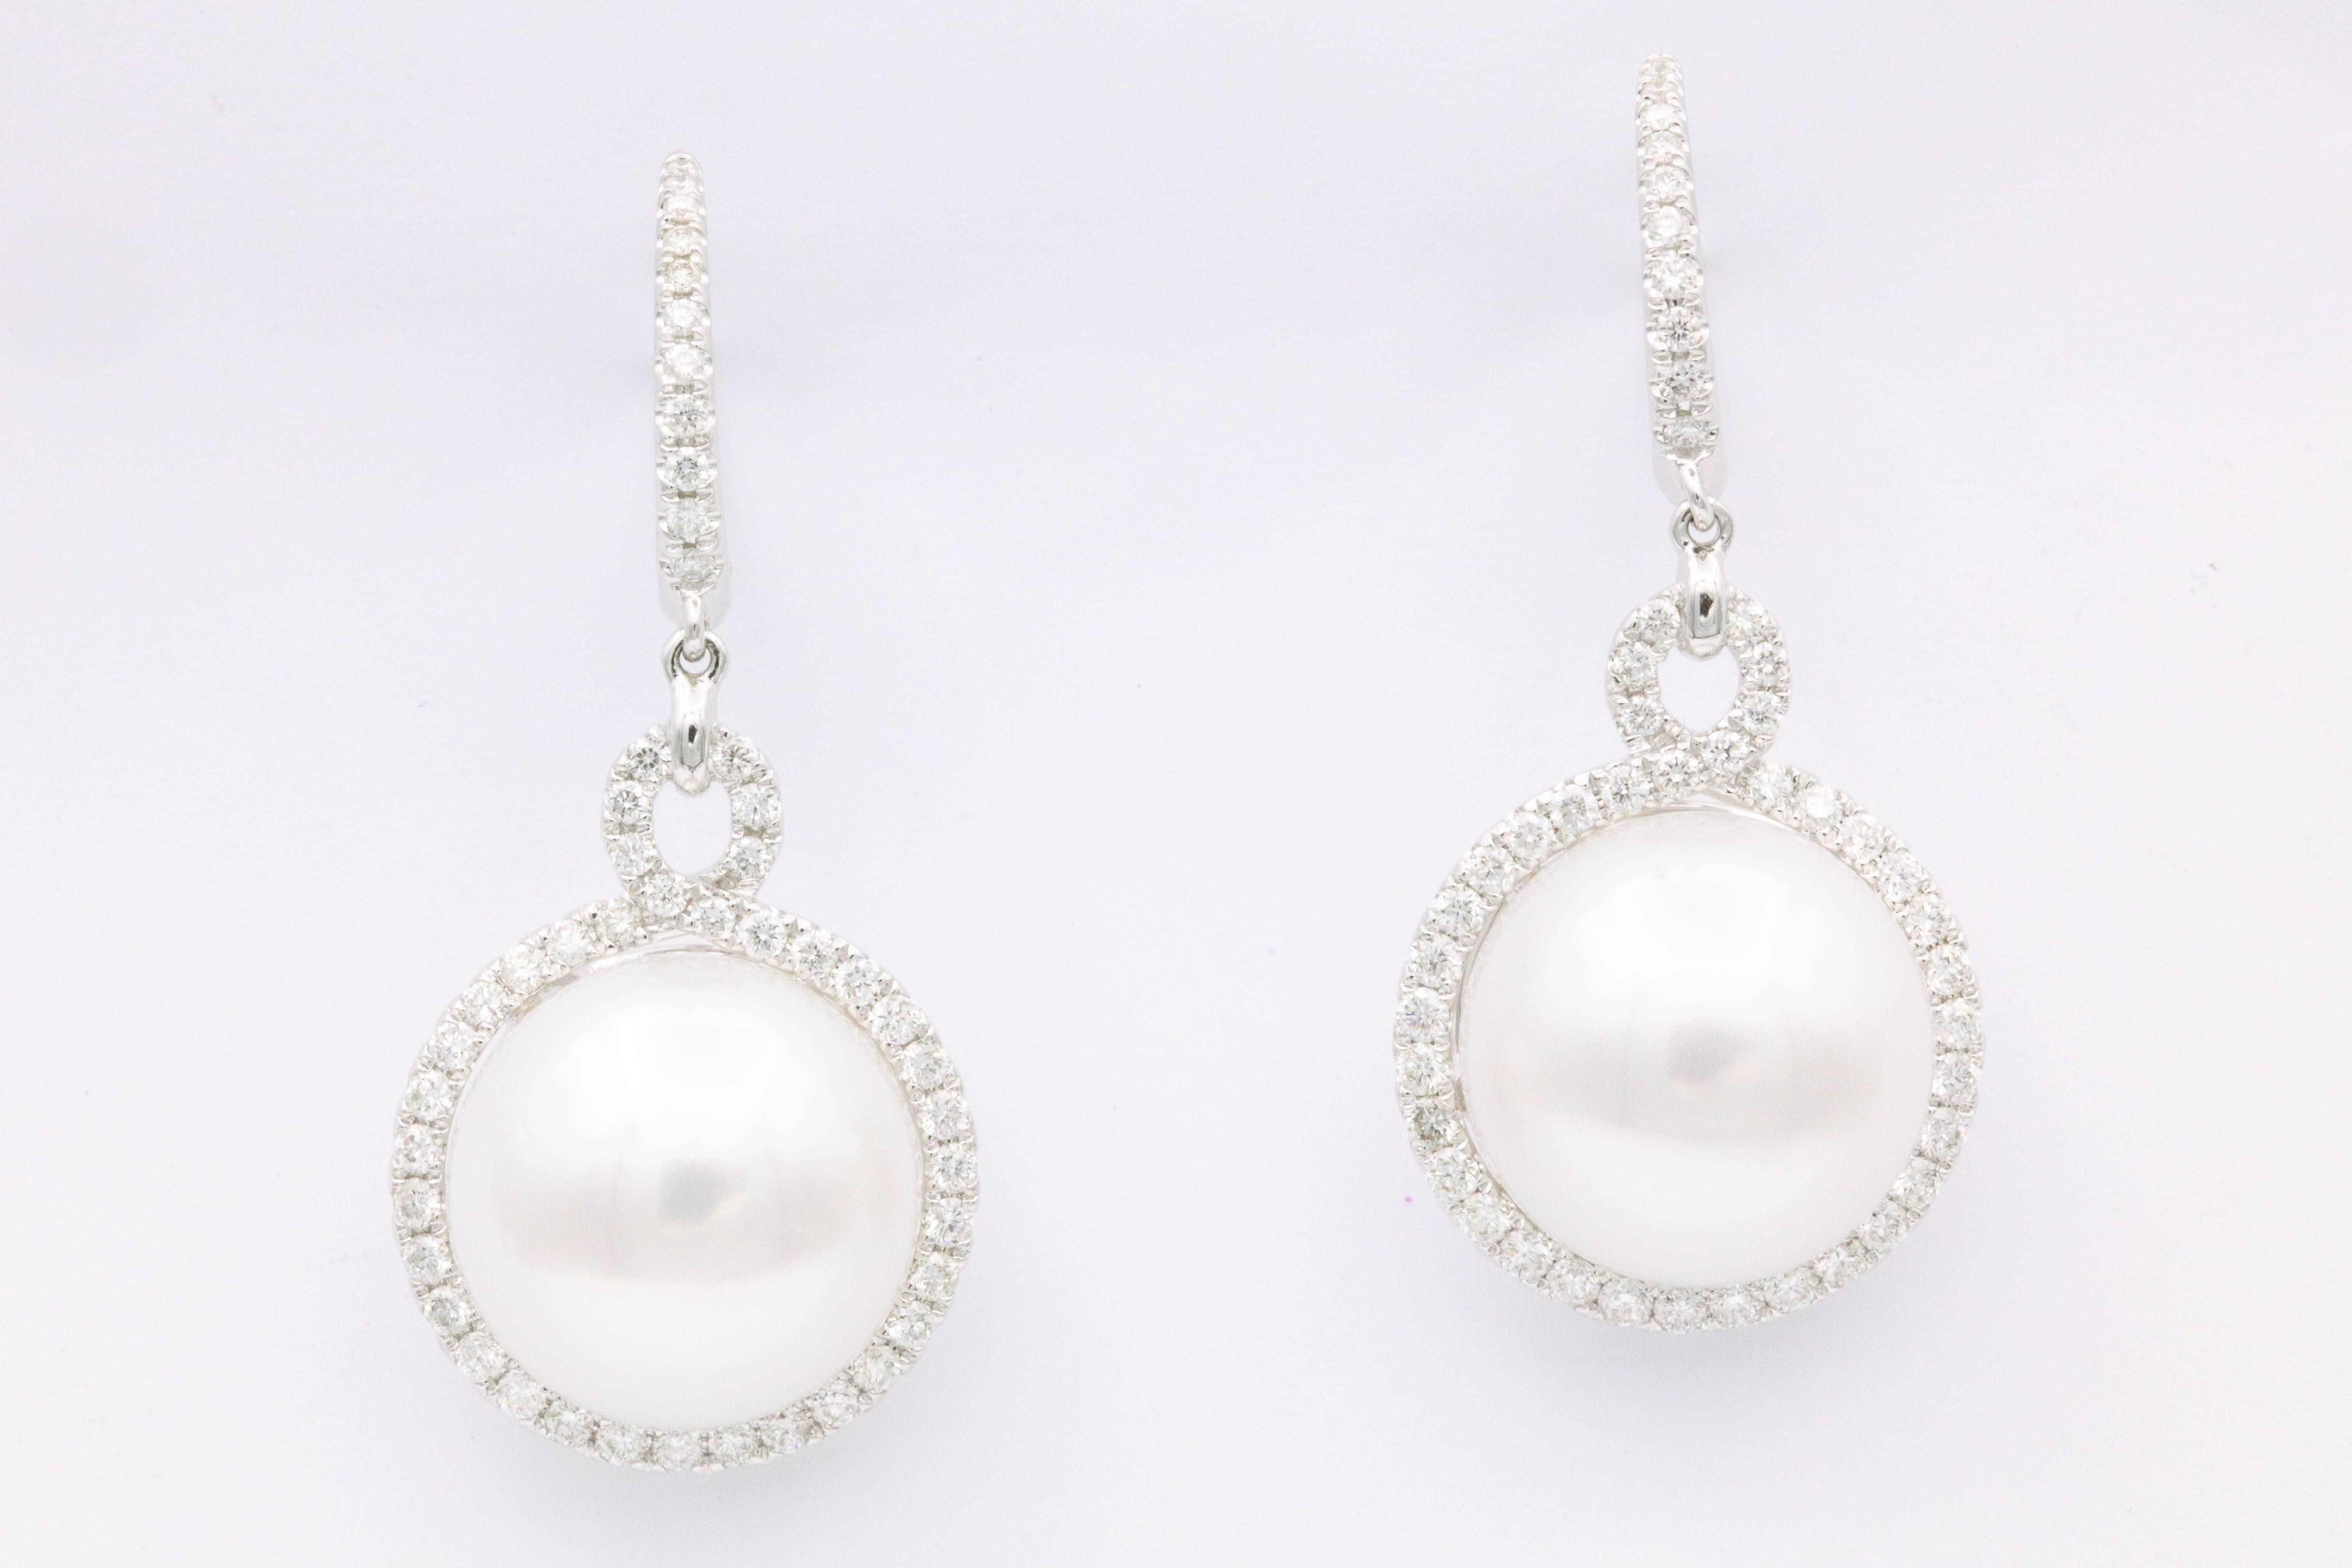 18K White Gold
South Sea Pearl 13-14 mm
Diamonds 0.90 Cts.
Earrings 3.5 cm long